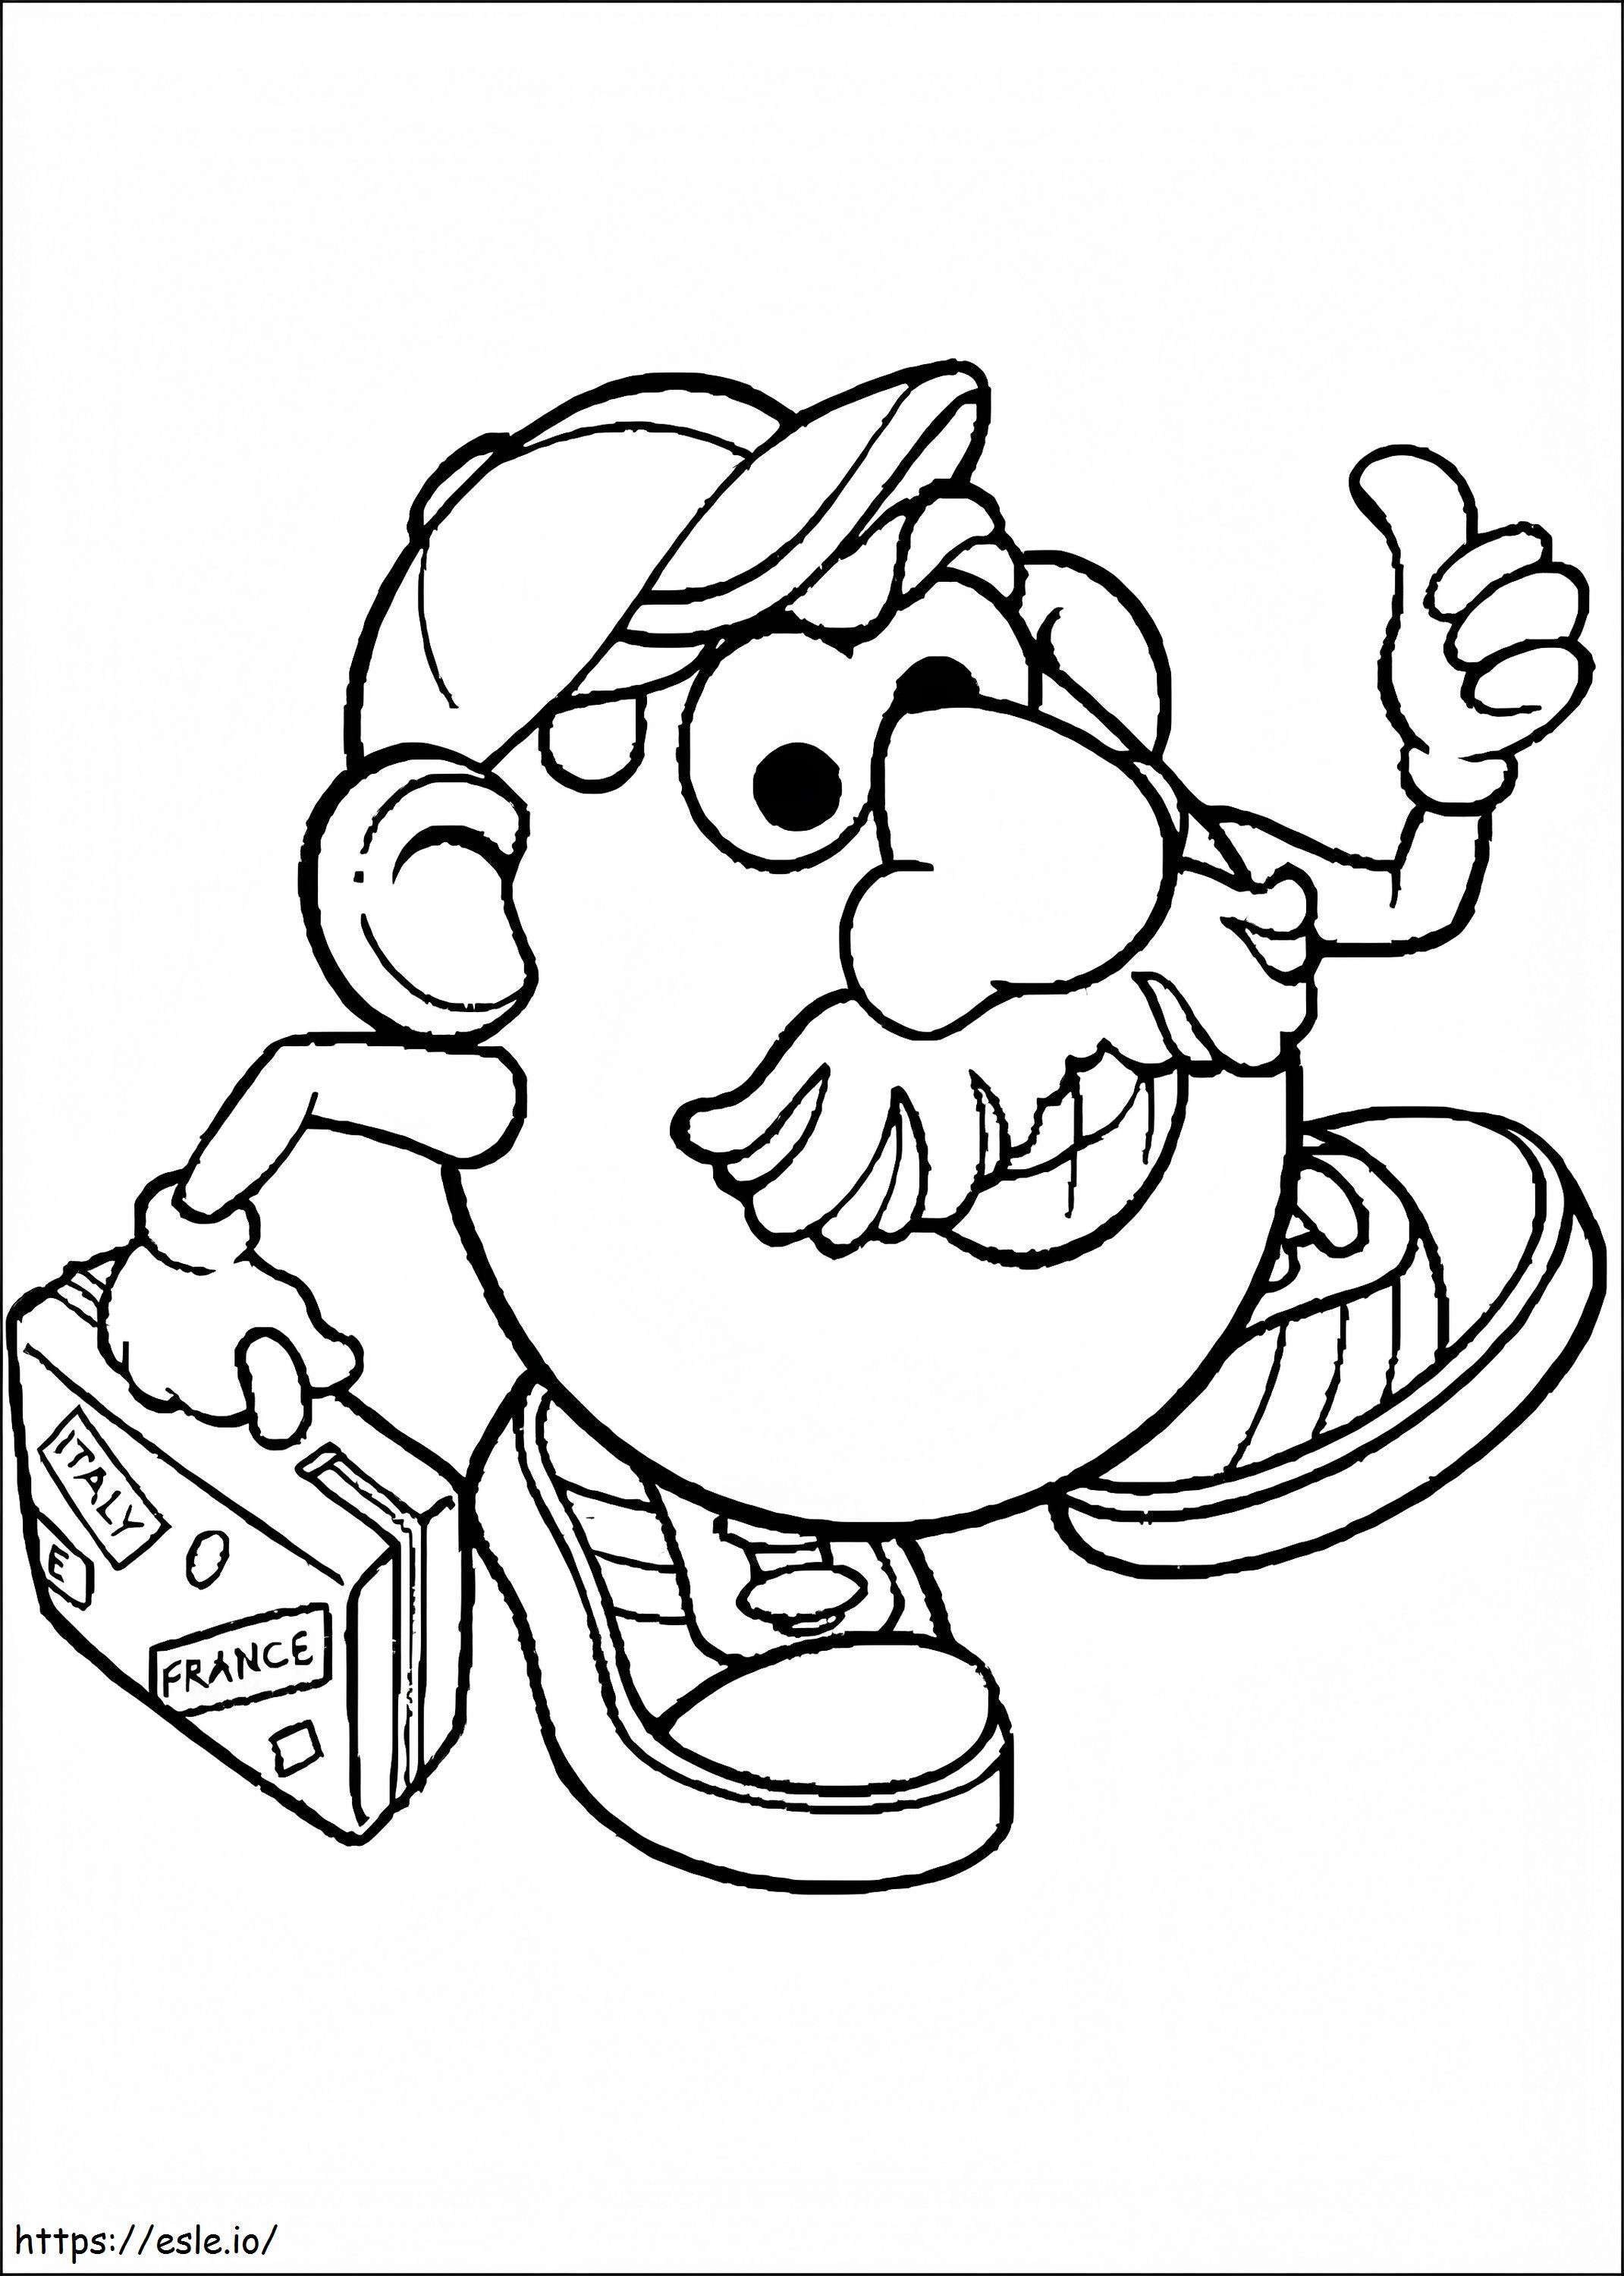 Mr. Potato Head Tourist coloring page